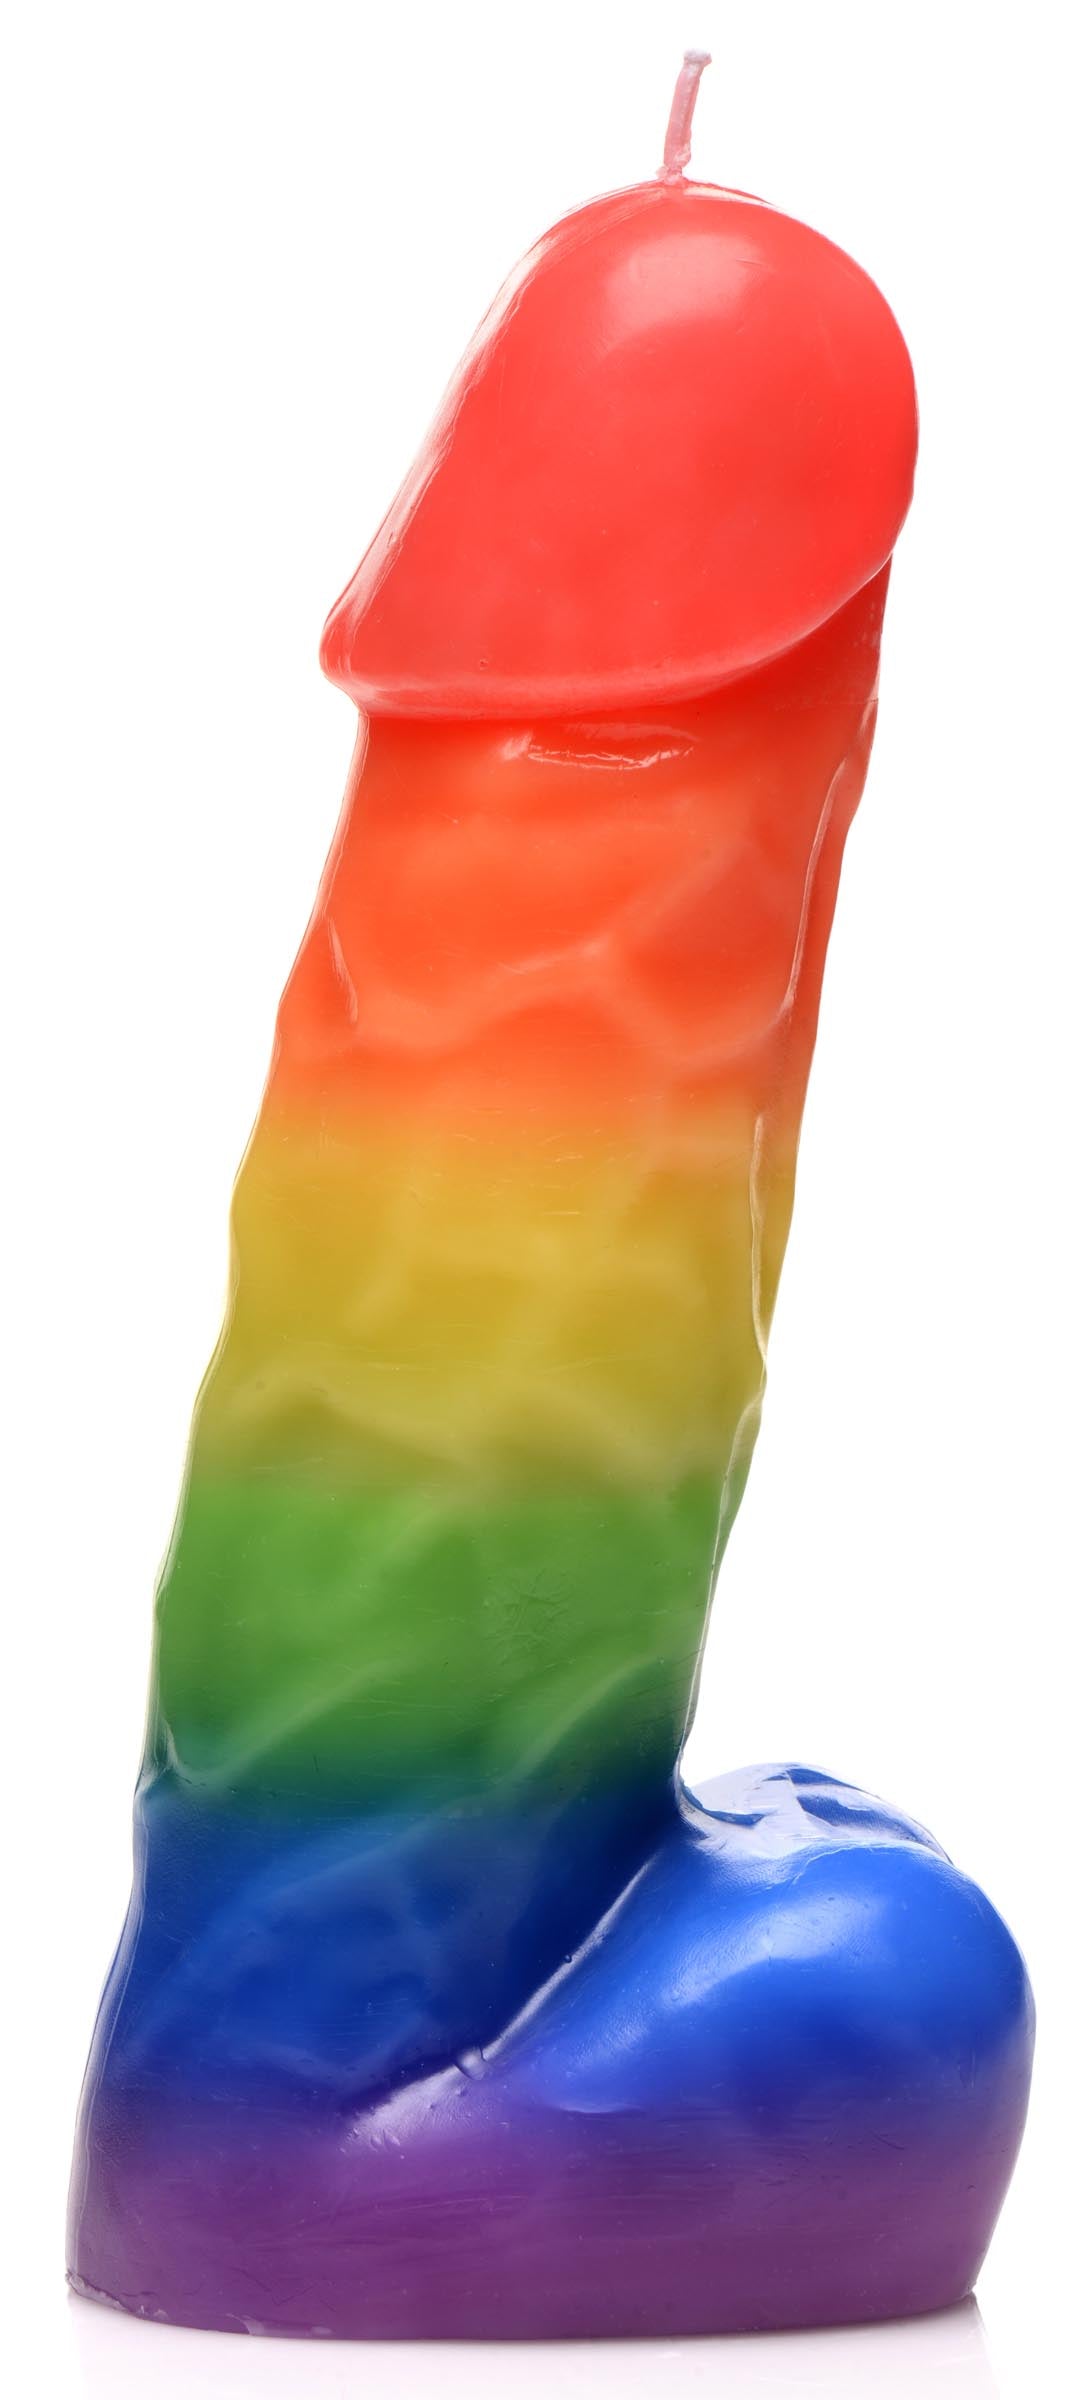 Pride Pecker Dick Drip Candle - Rainbow - UABDSM